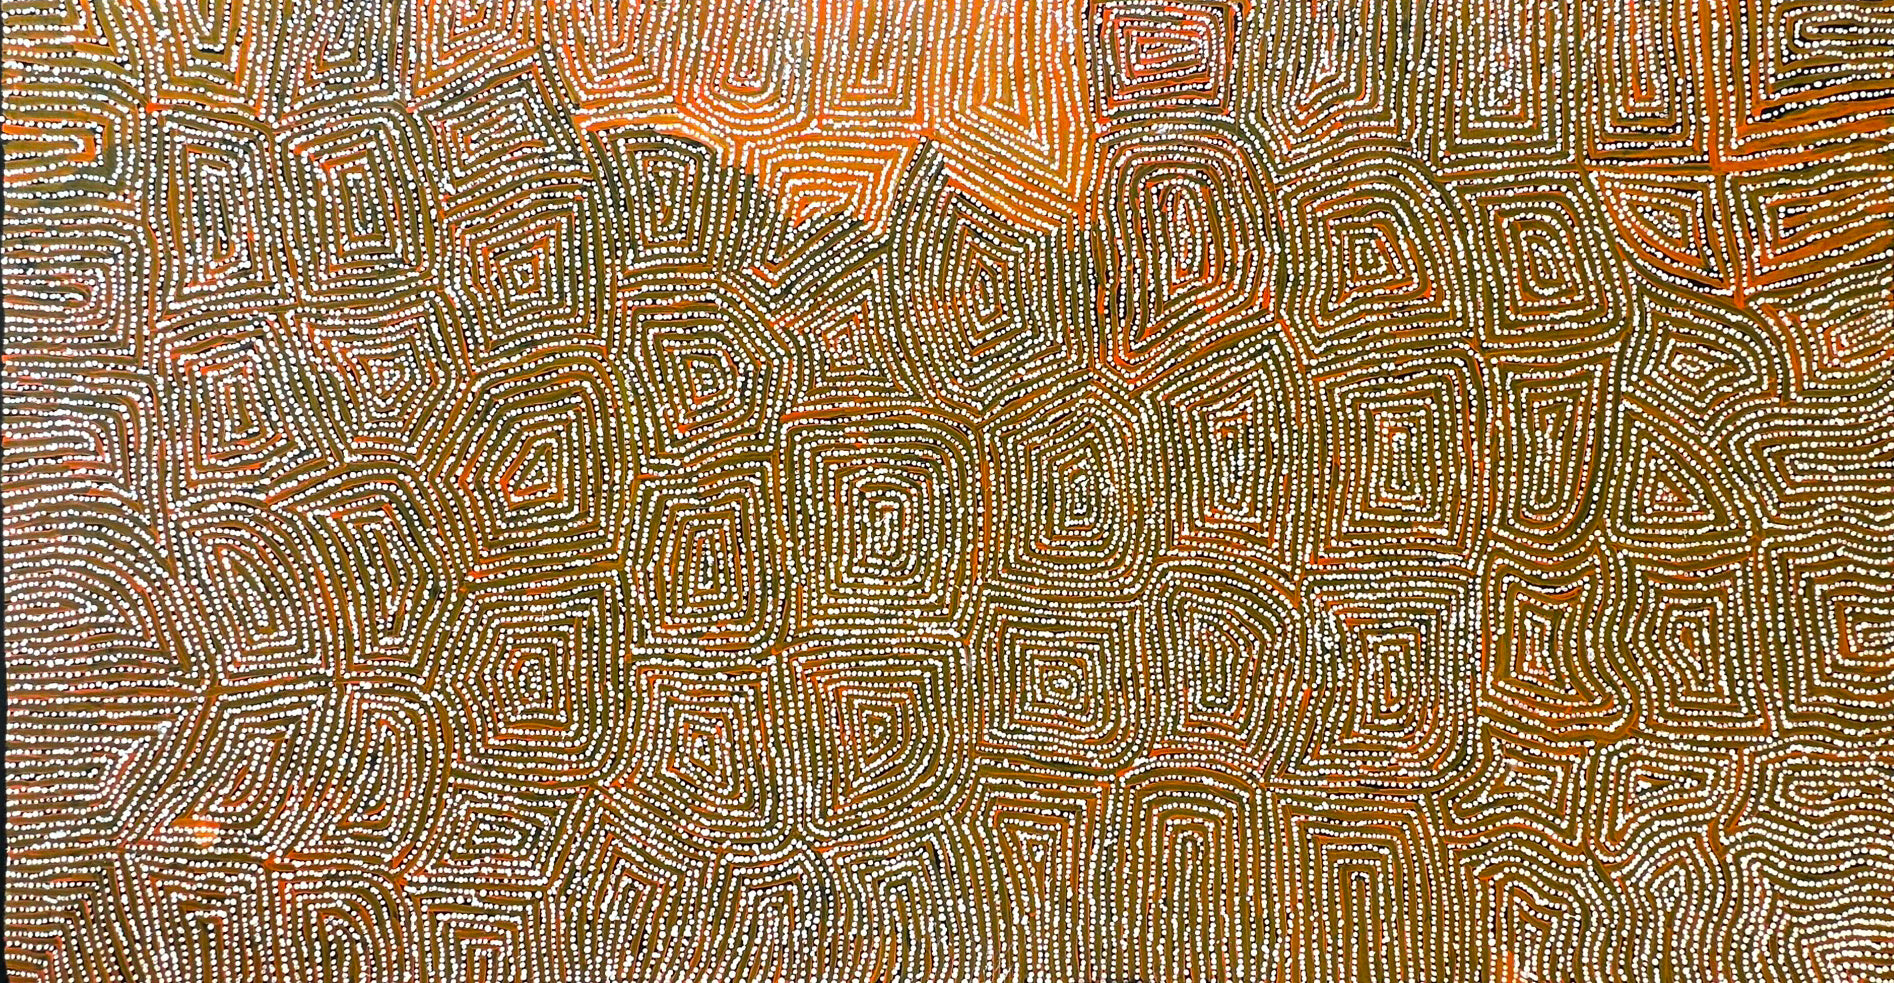 George Ward Tjungaurrayi Tingari Western Desert Male Artist Indigenous Art Aboriginal Art Australian Art Dot Art Dot Painting Dreaming Ancestors